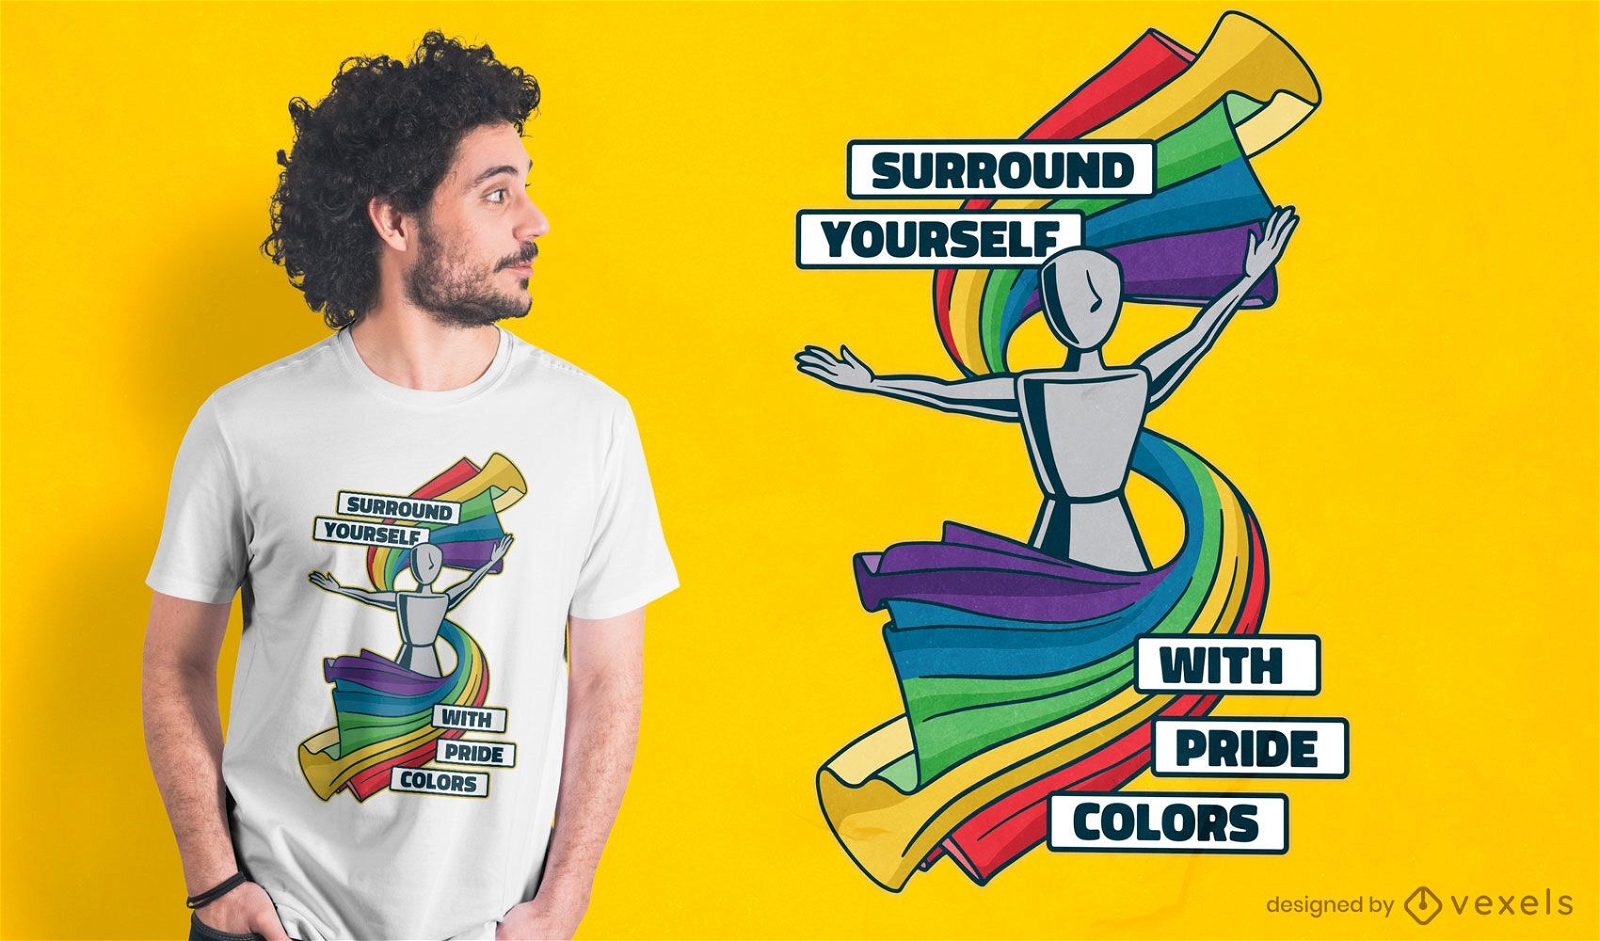 Pride colors t-shirt design